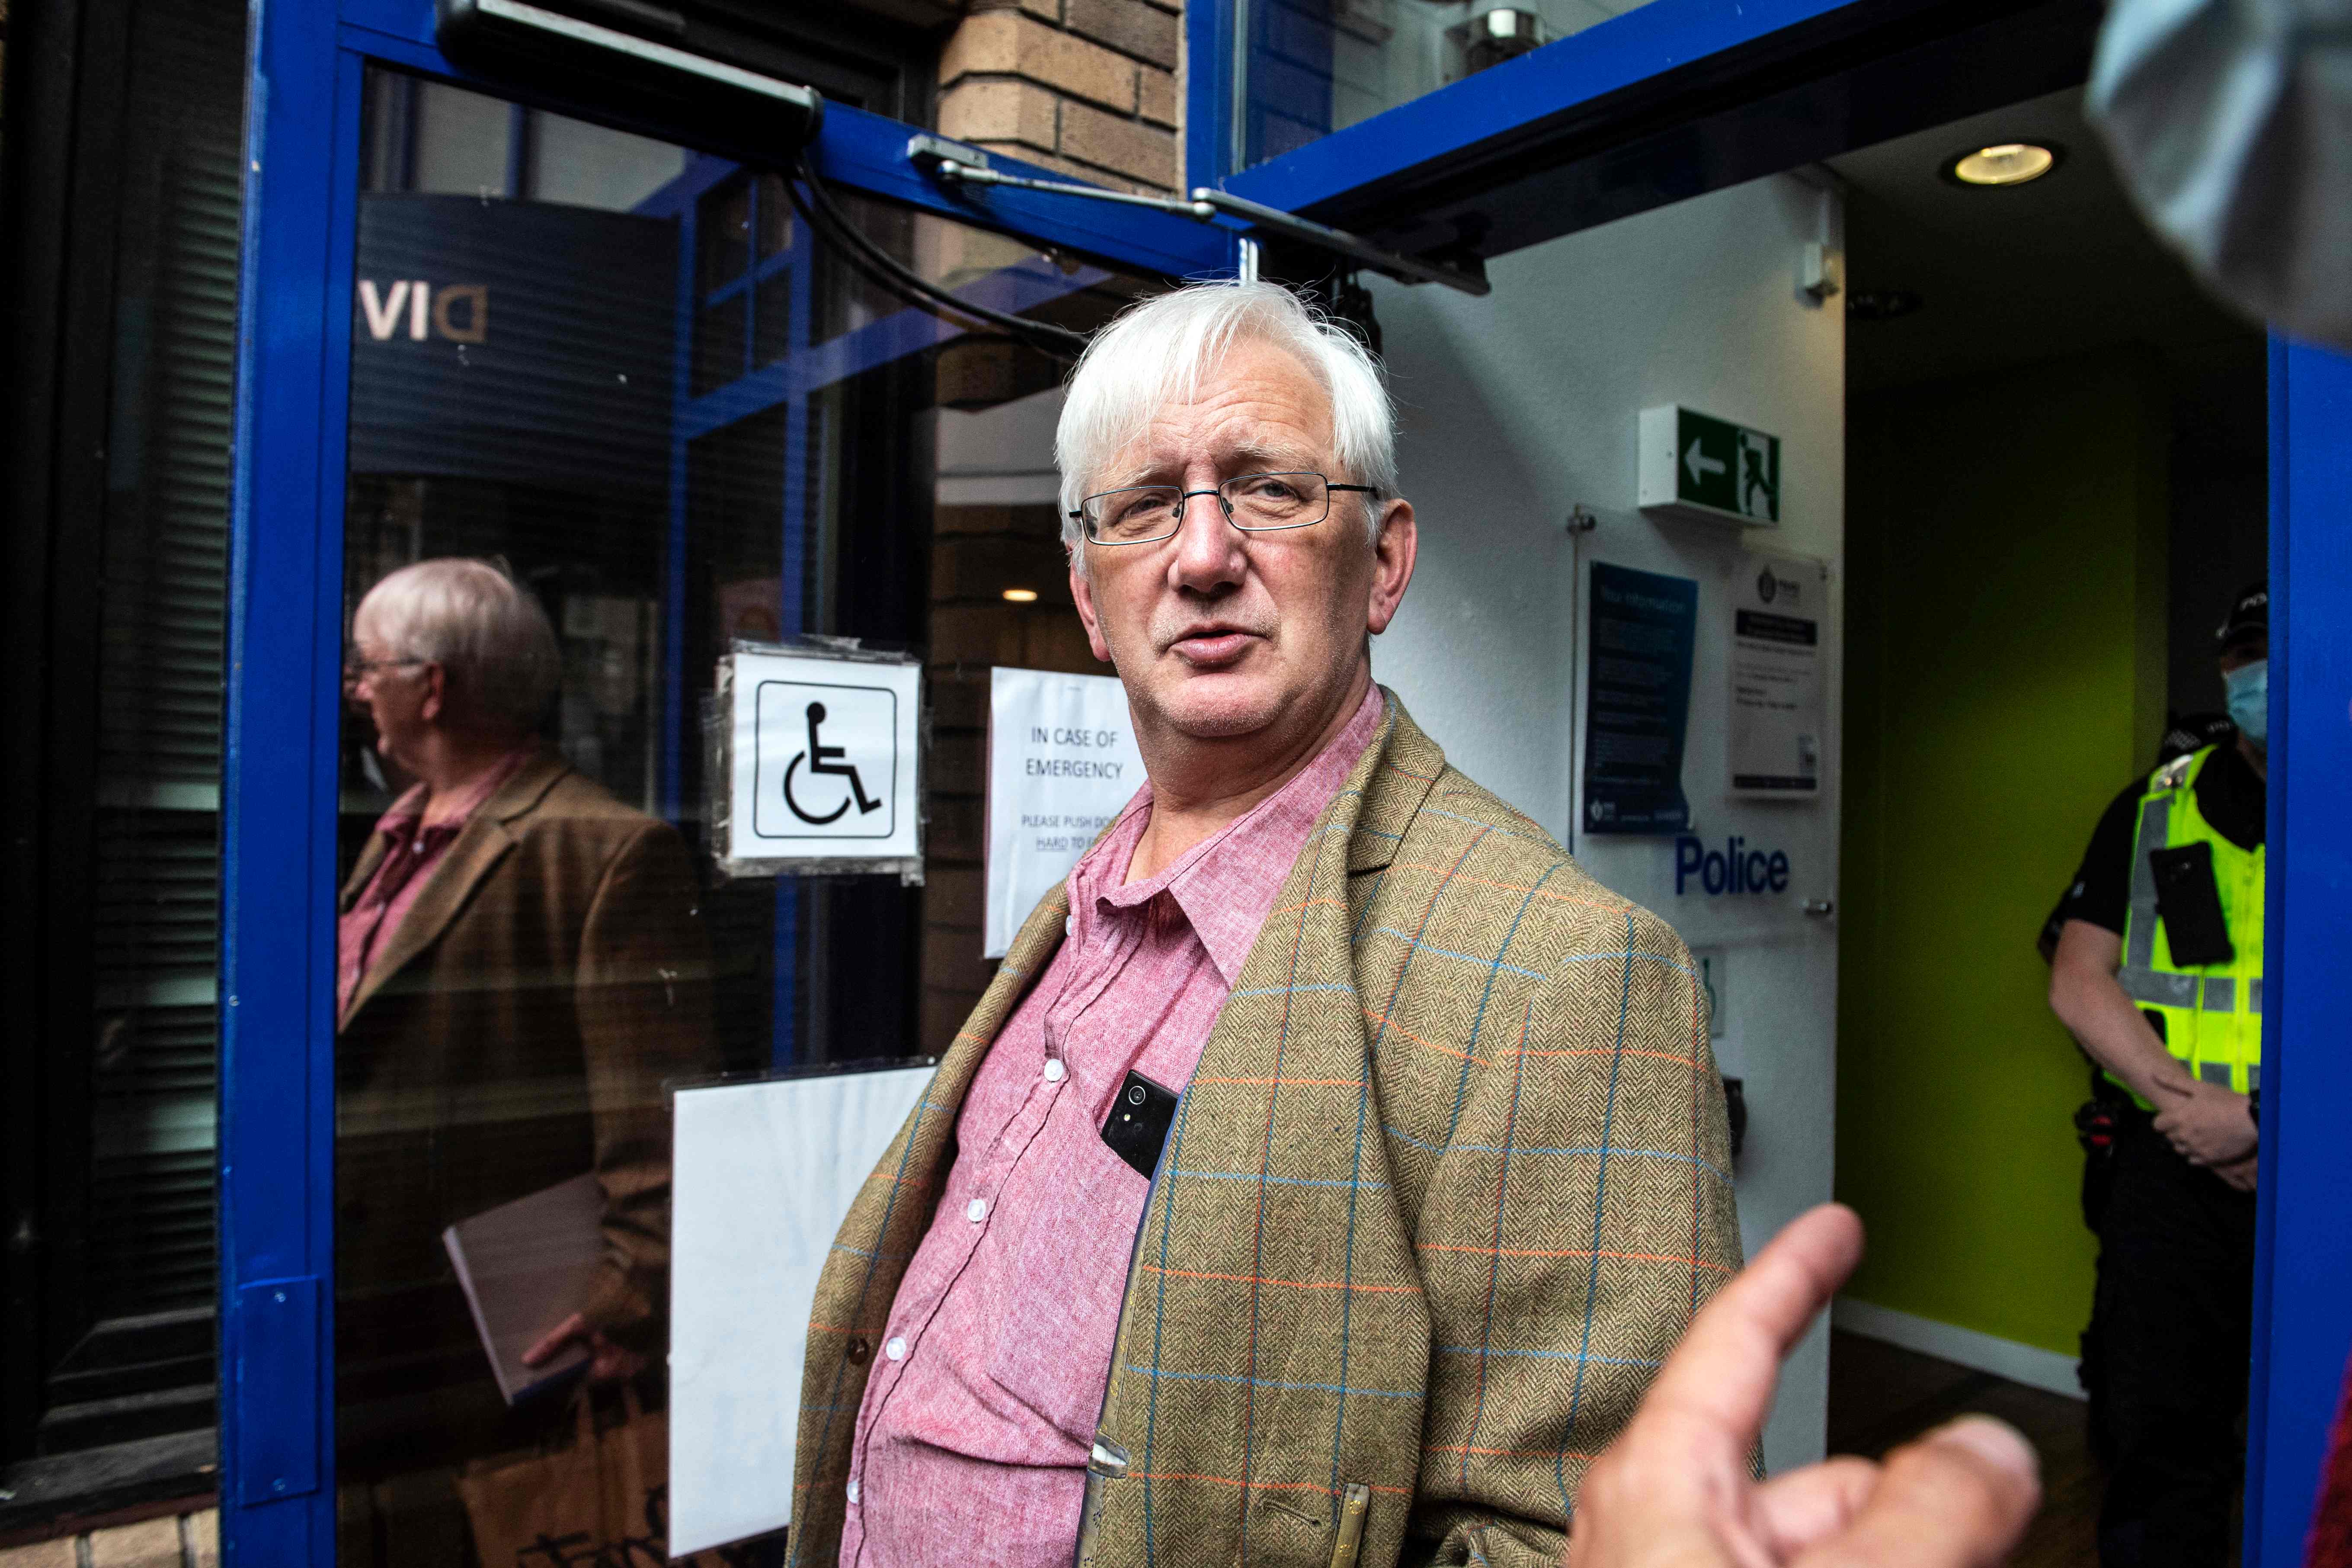 Murray, 62, presented himself to St Leonard’s police station in Edinburgh on Sunday morning